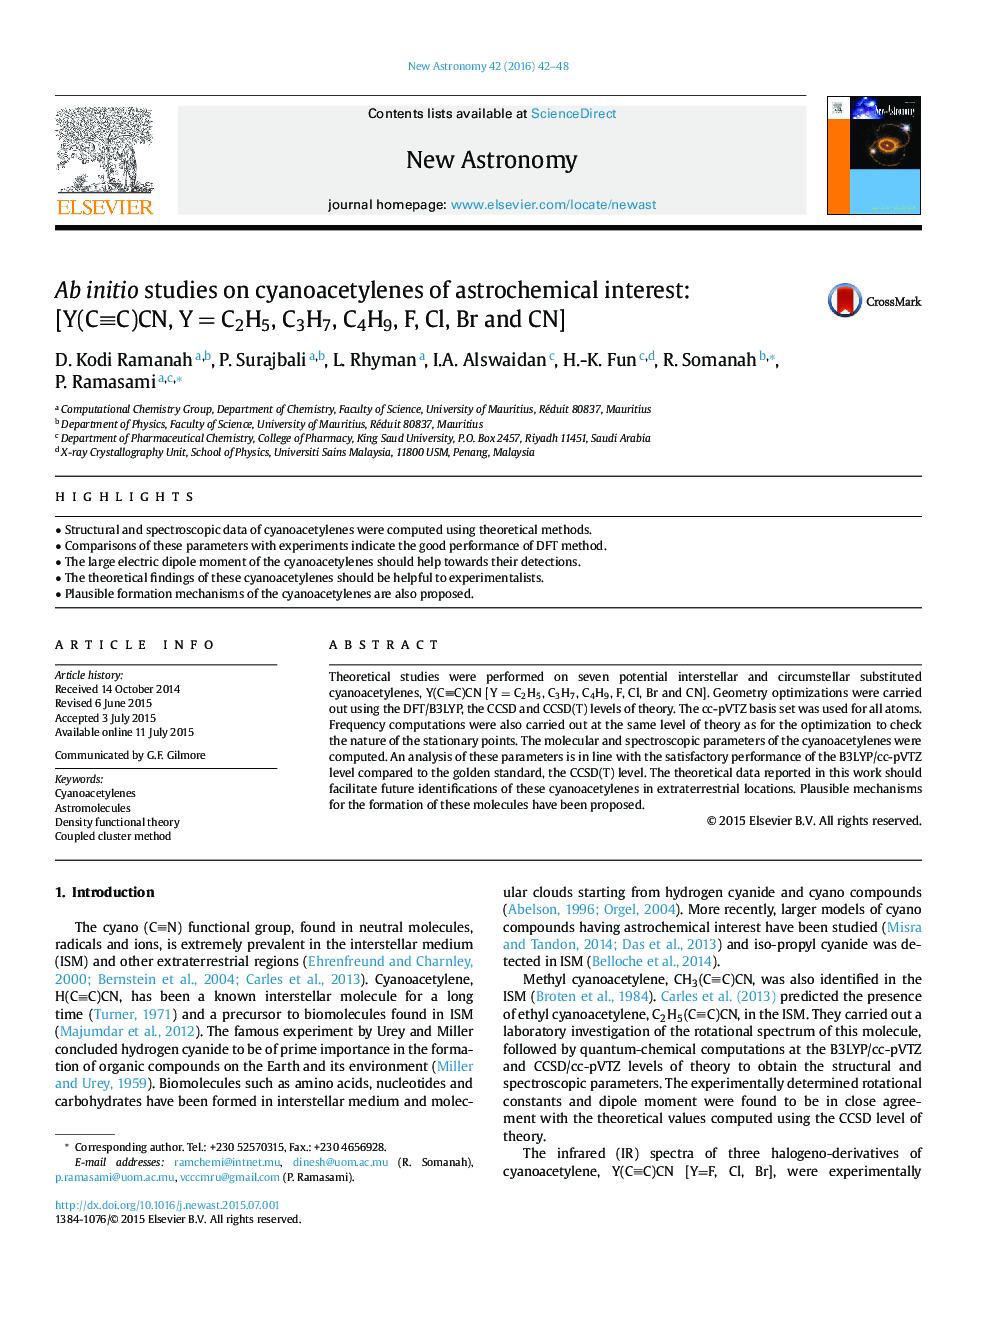 Ab initio studies on cyanoacetylenes of astrochemical interest: [Y(CC)CN, Y  C2H5, C3H7, C4H9, F, Cl, Br and CN]